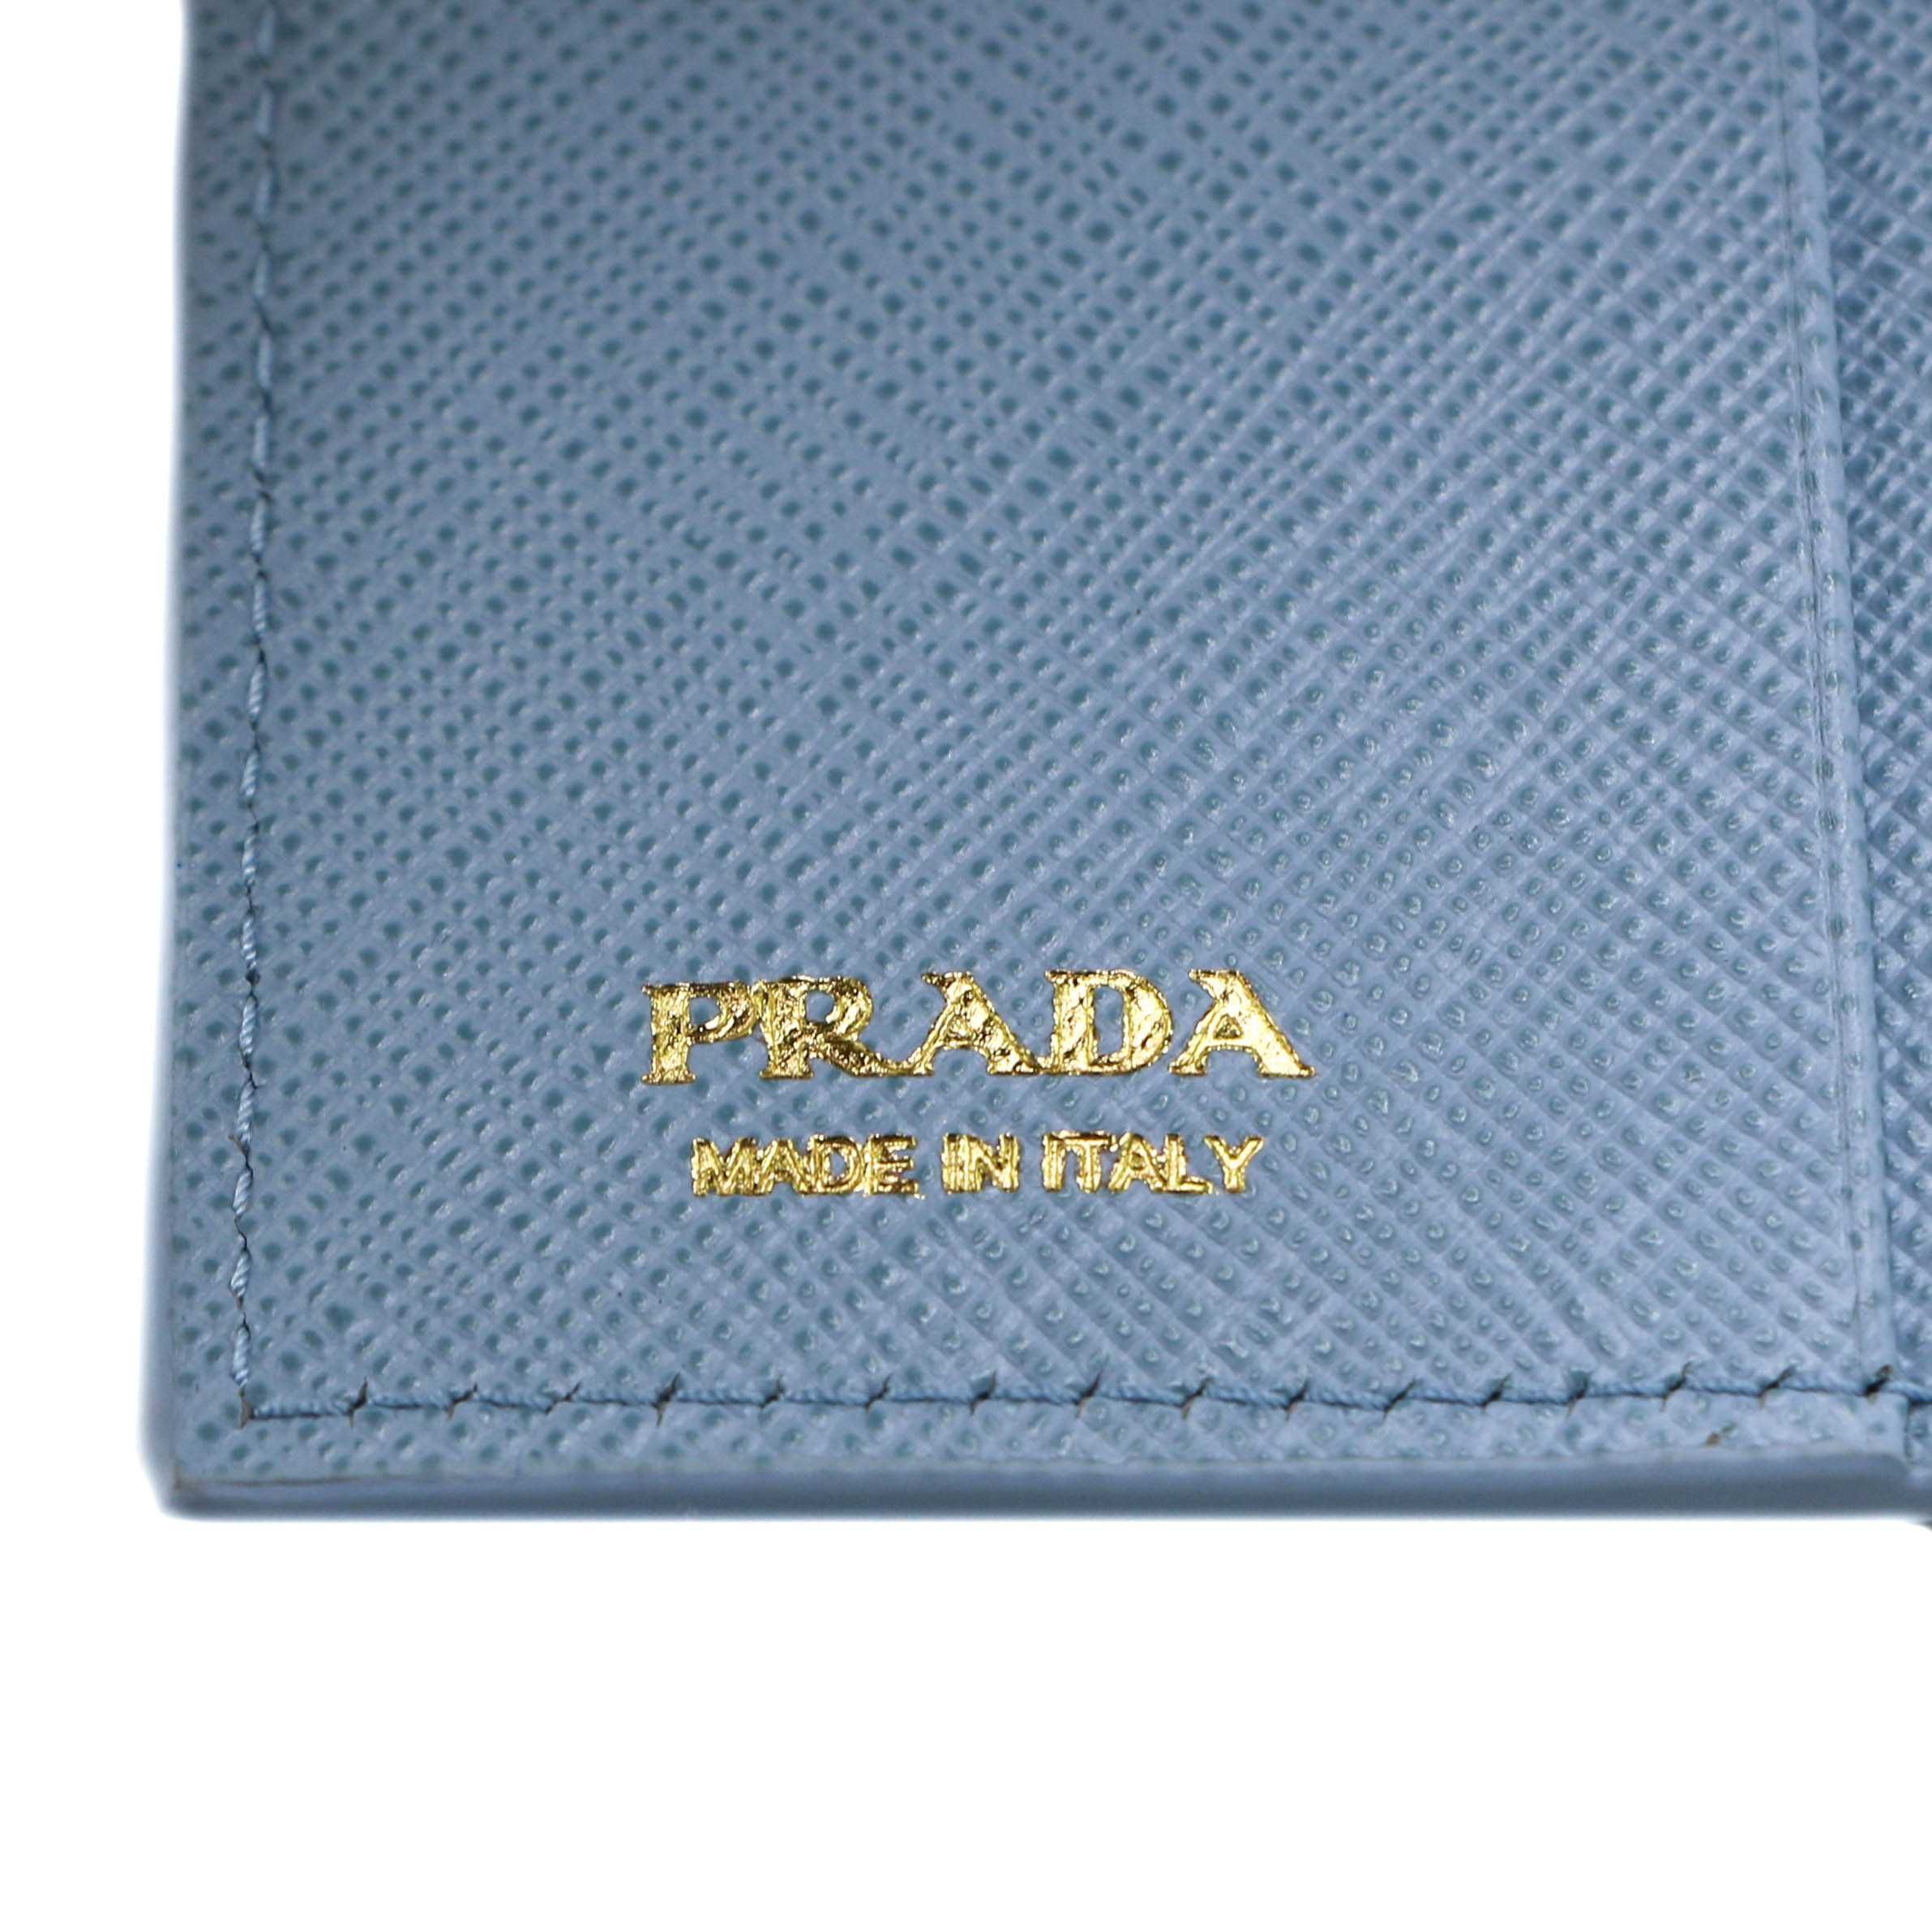 Оригинално портмоне Prada – Blue Bifold Small Saffiano Leather Wallet